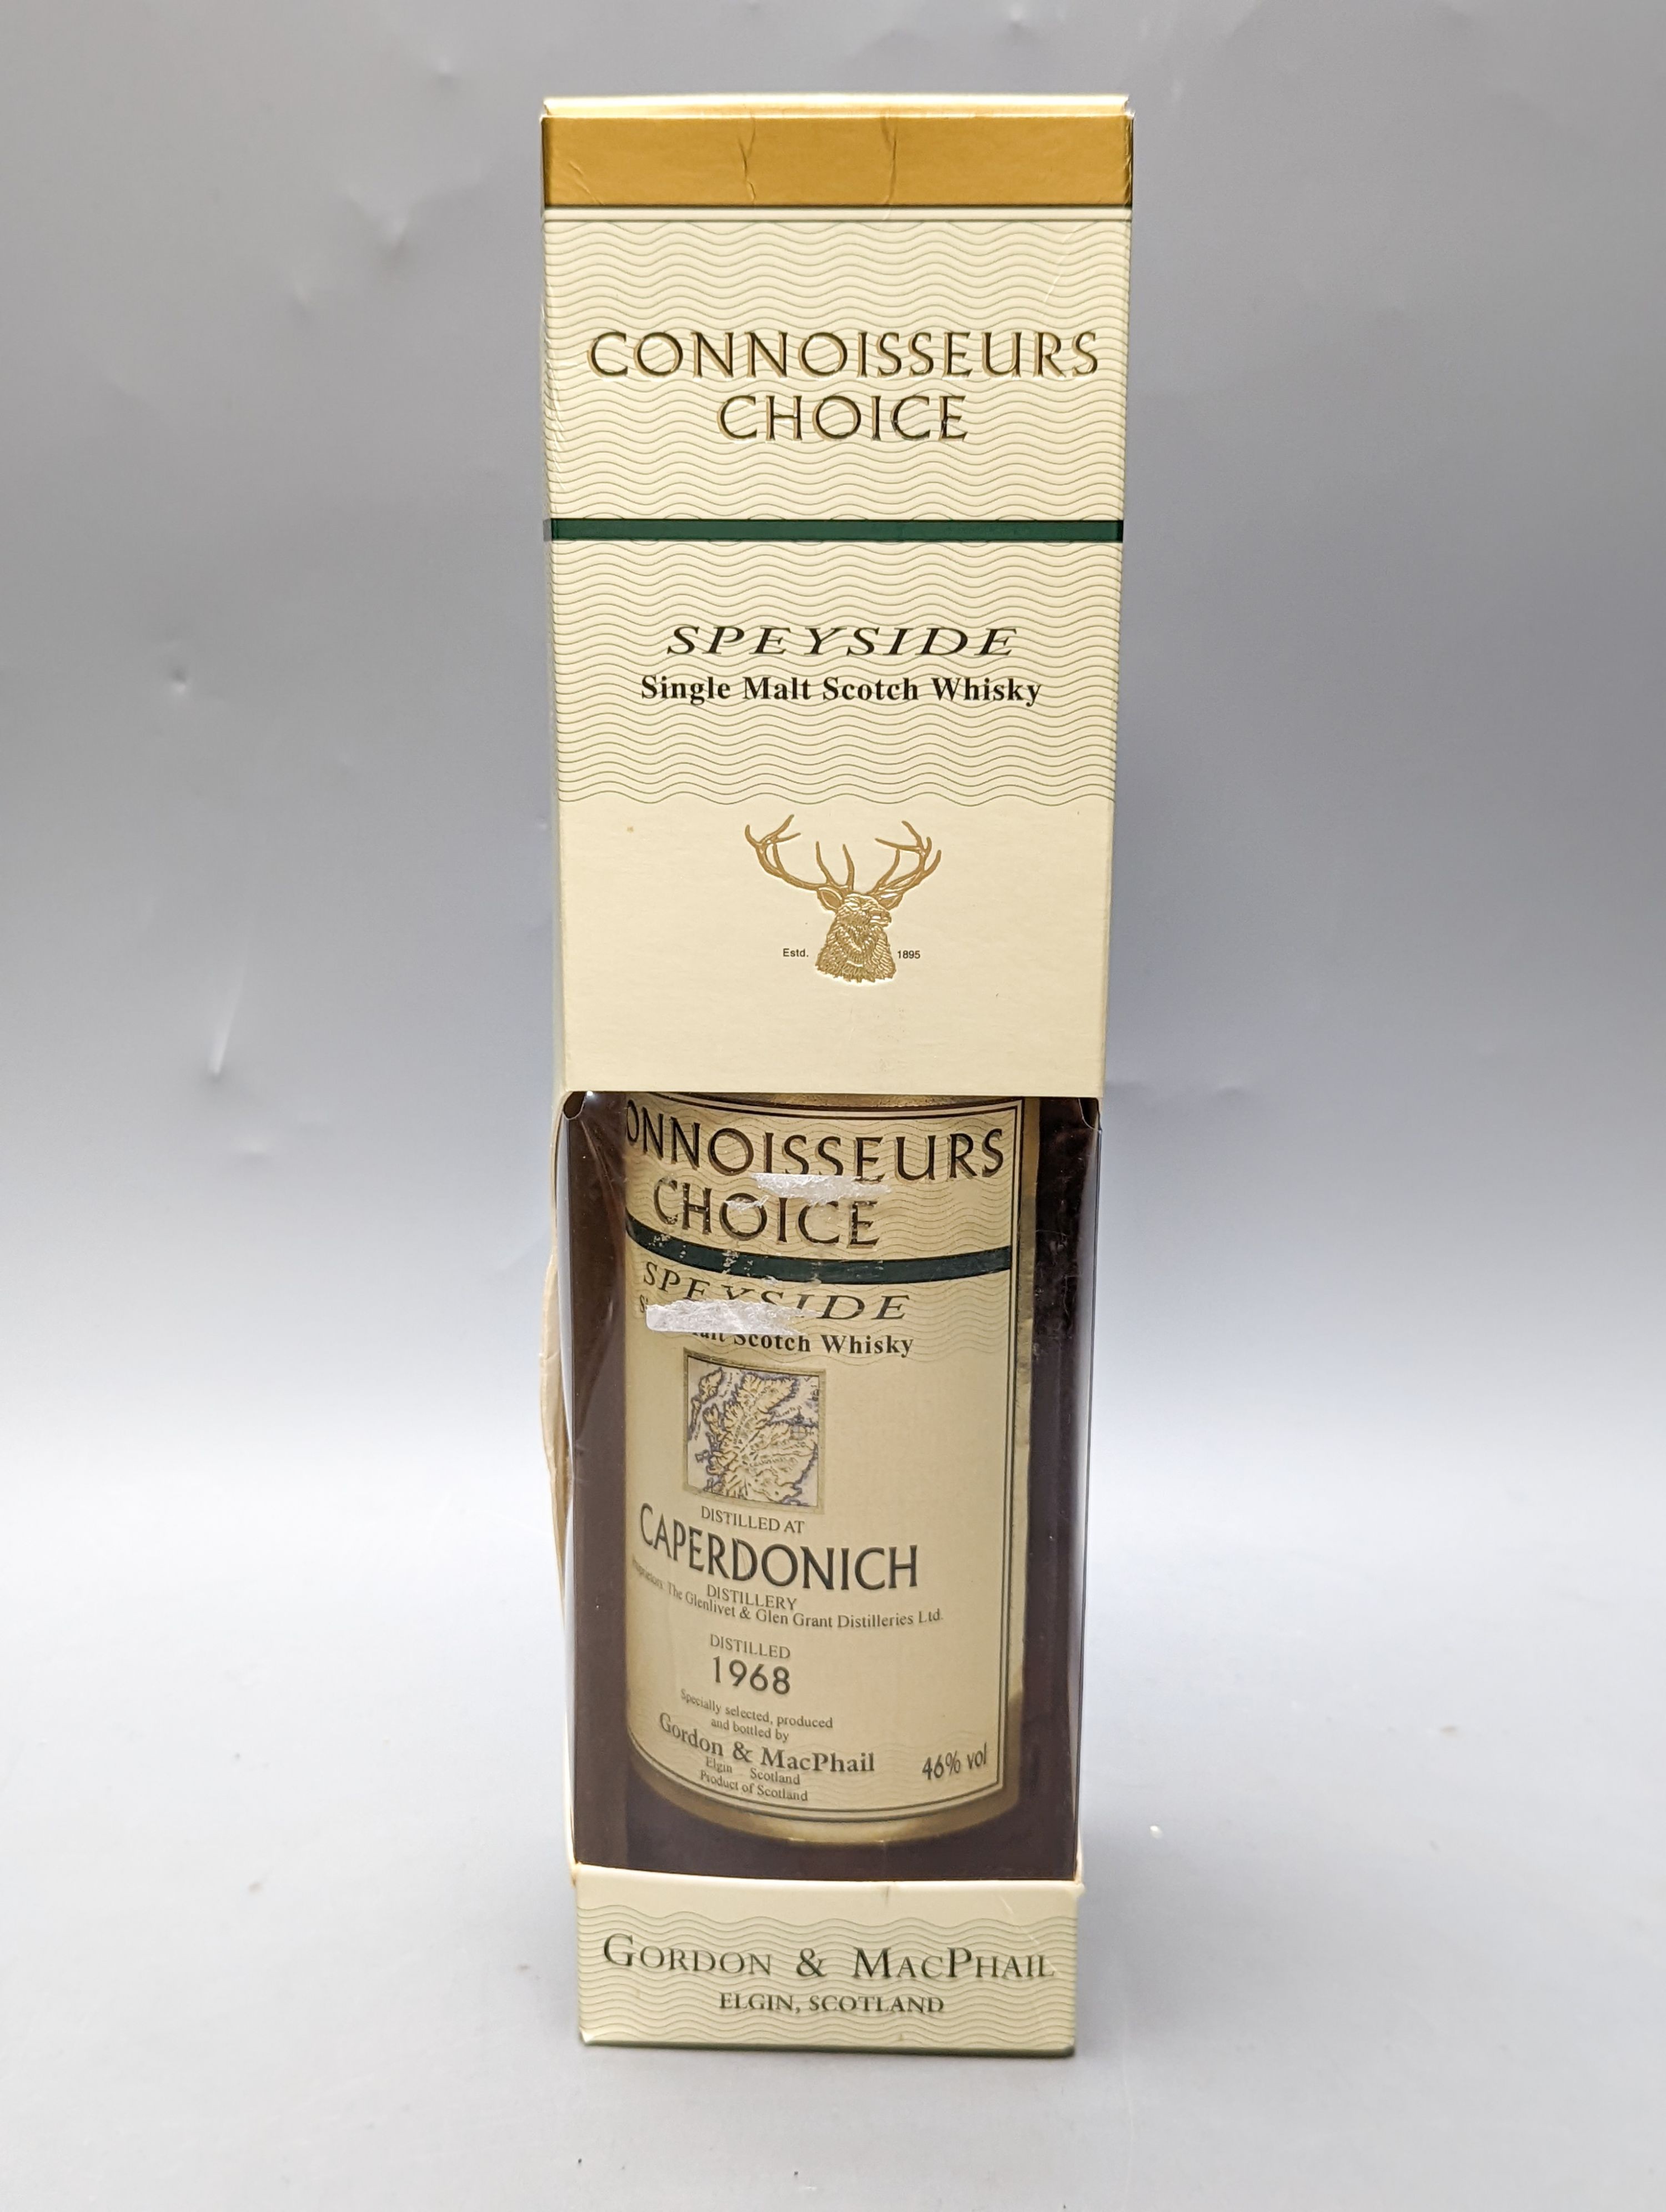 One bottle of Caperdonich Connoisseur's Choice single malt whisky, distilled 1968, in original box.